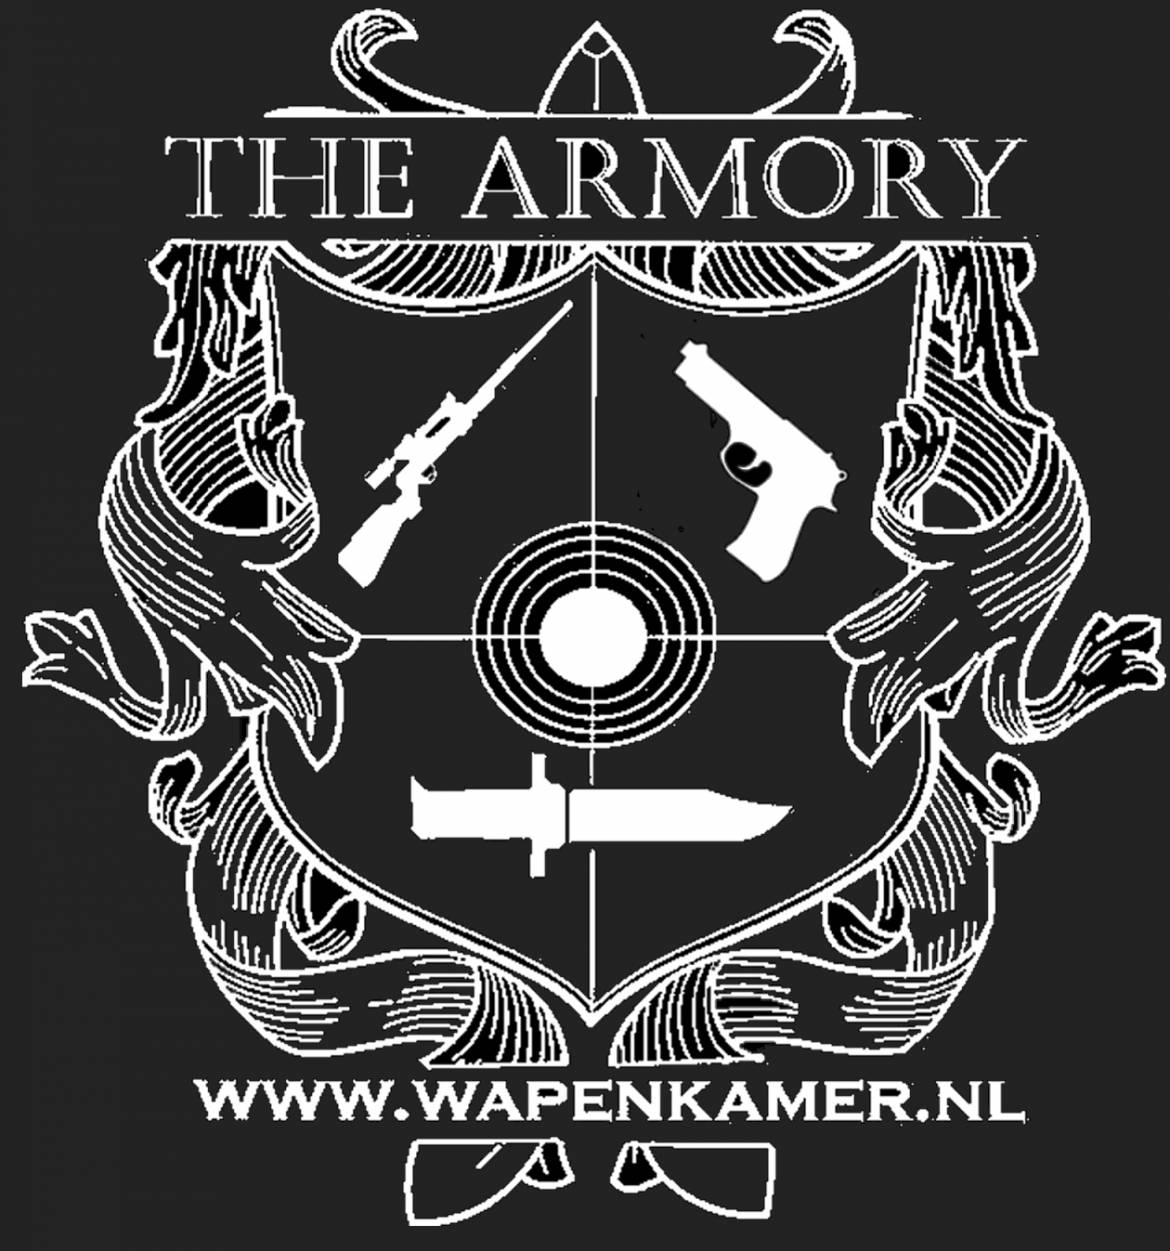 TheArmory-zwart-gun-safety-3.jpg